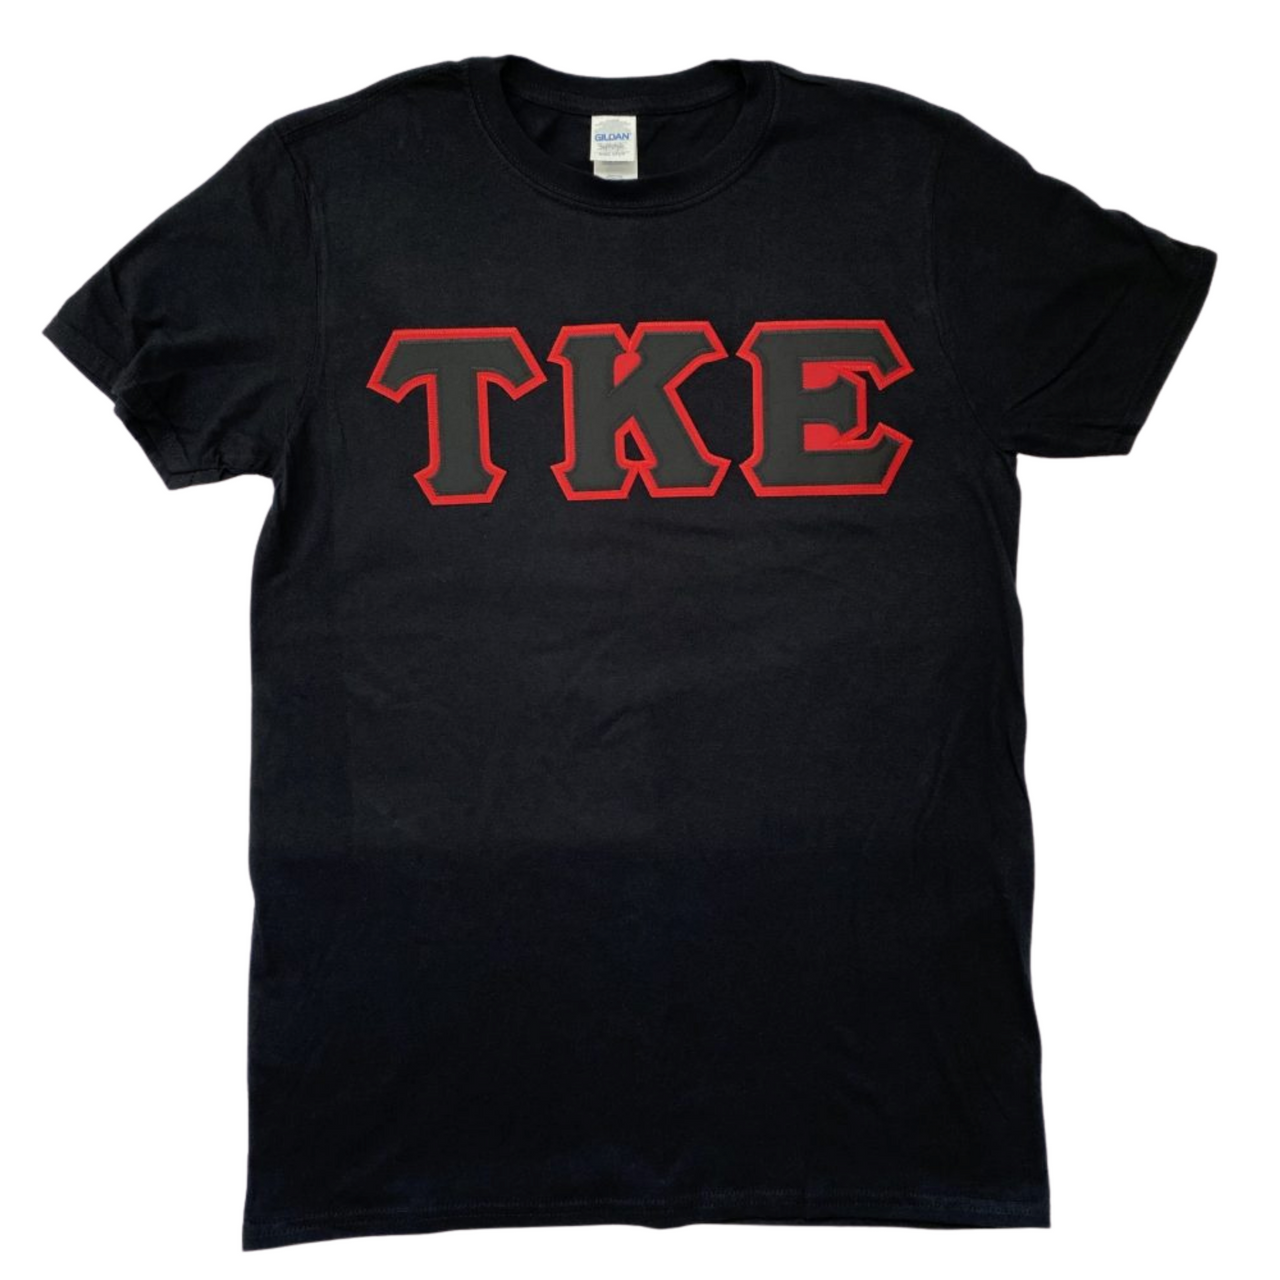 Tau Kappa Epsilon Stitched Letter T-Shirt | Black | Black with Red Border